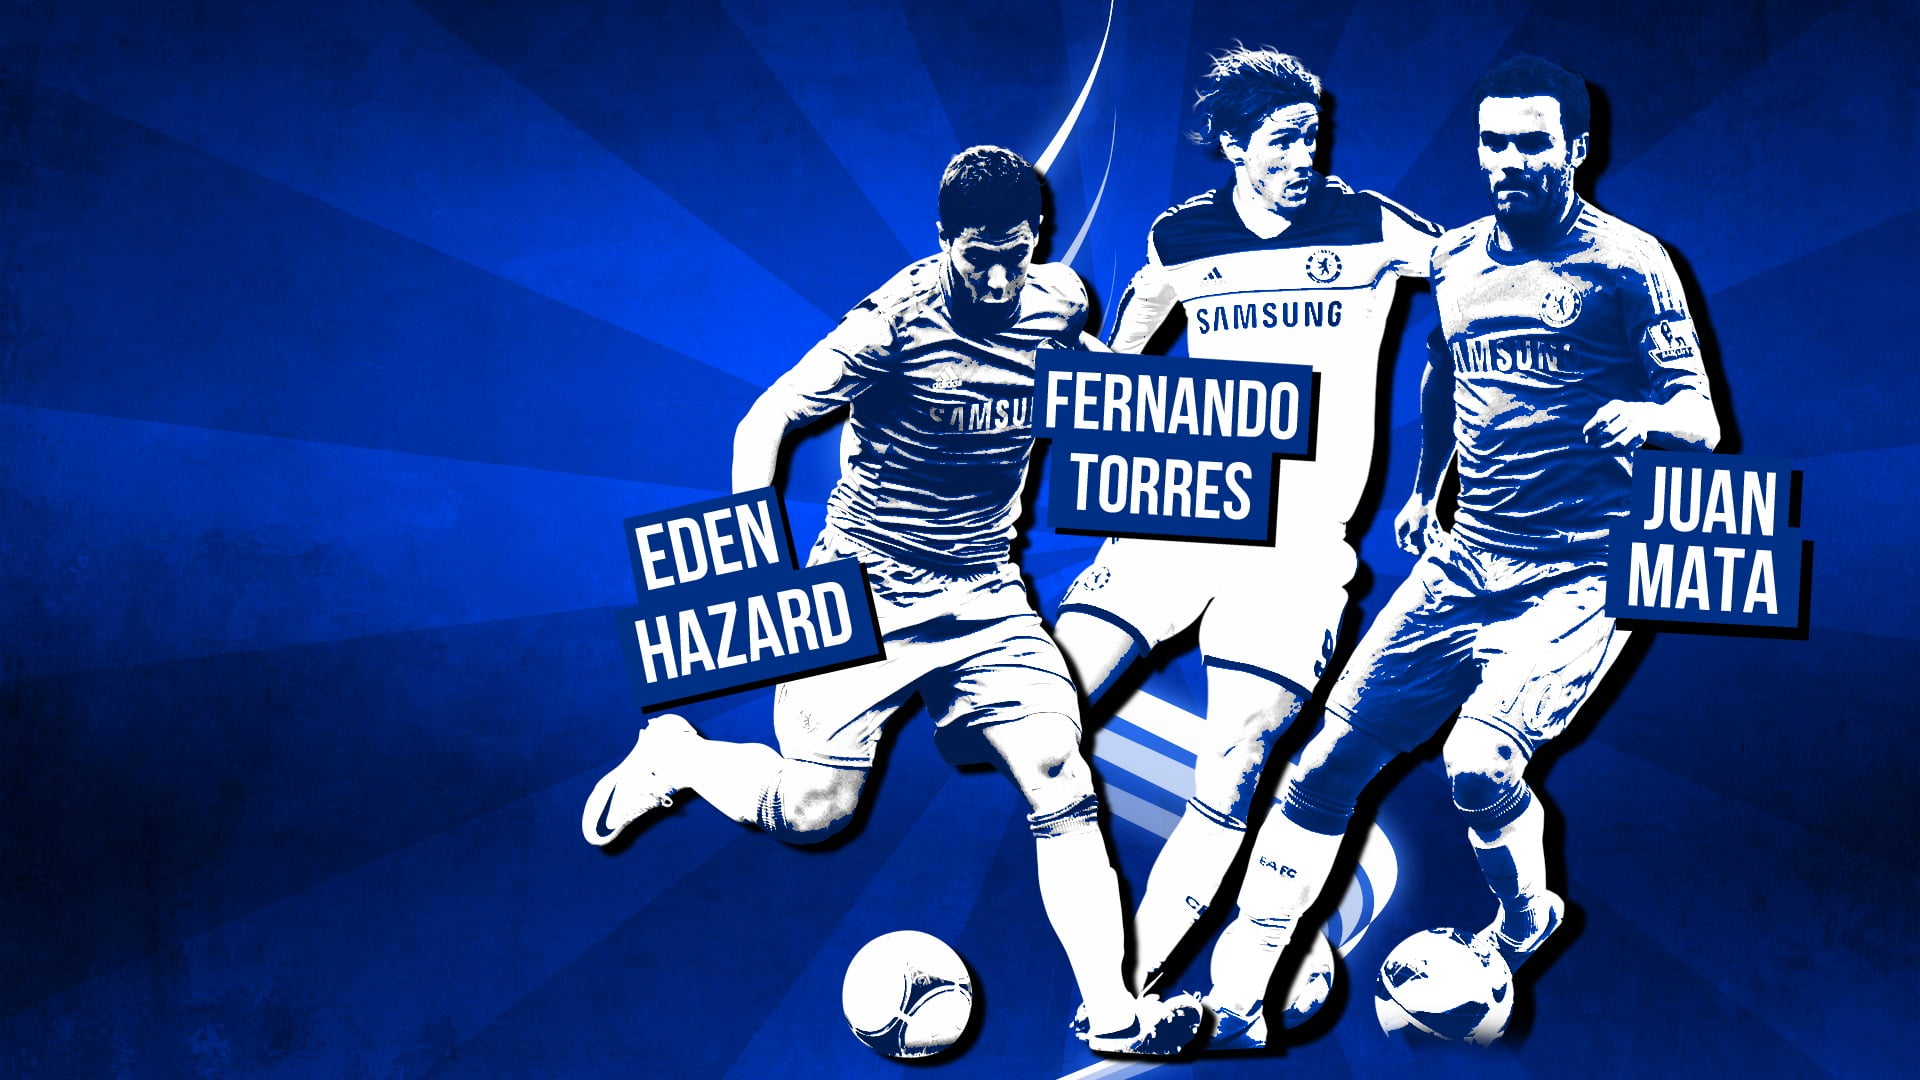 Eden Hazard, Fernando Torres and Juan Mata illustration